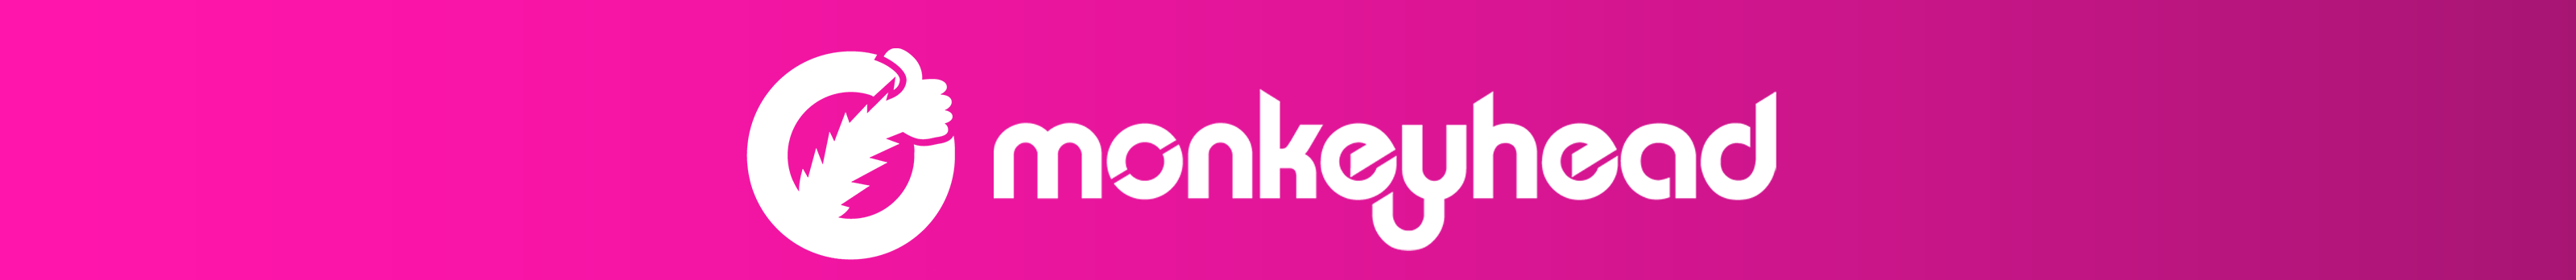 Monkeyhead LLC's profile banner